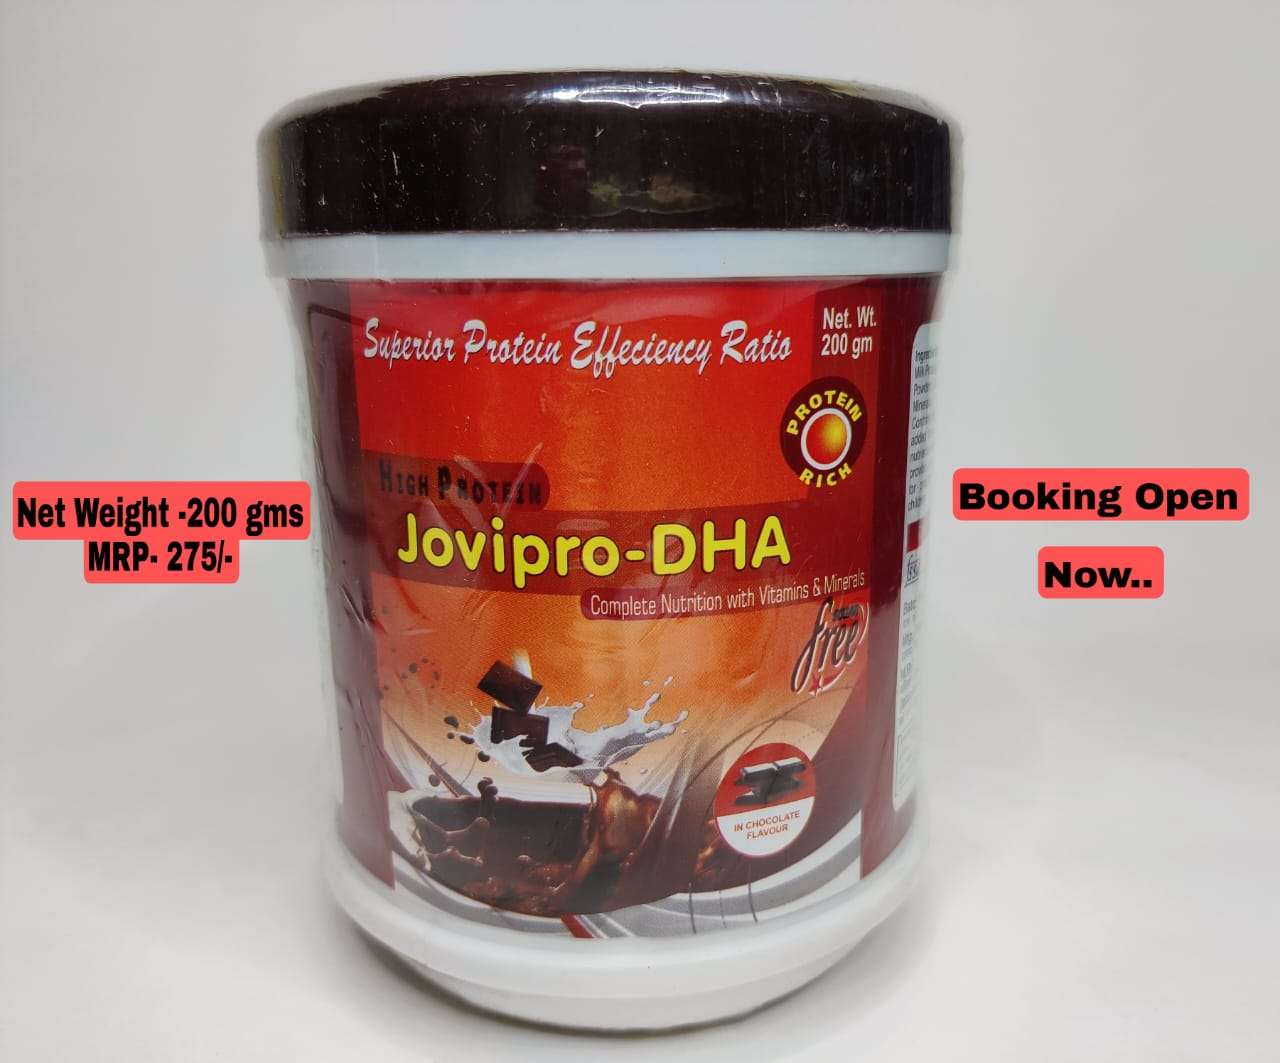 protein powder with dha 200 gm (choc0late flavour) sugar free